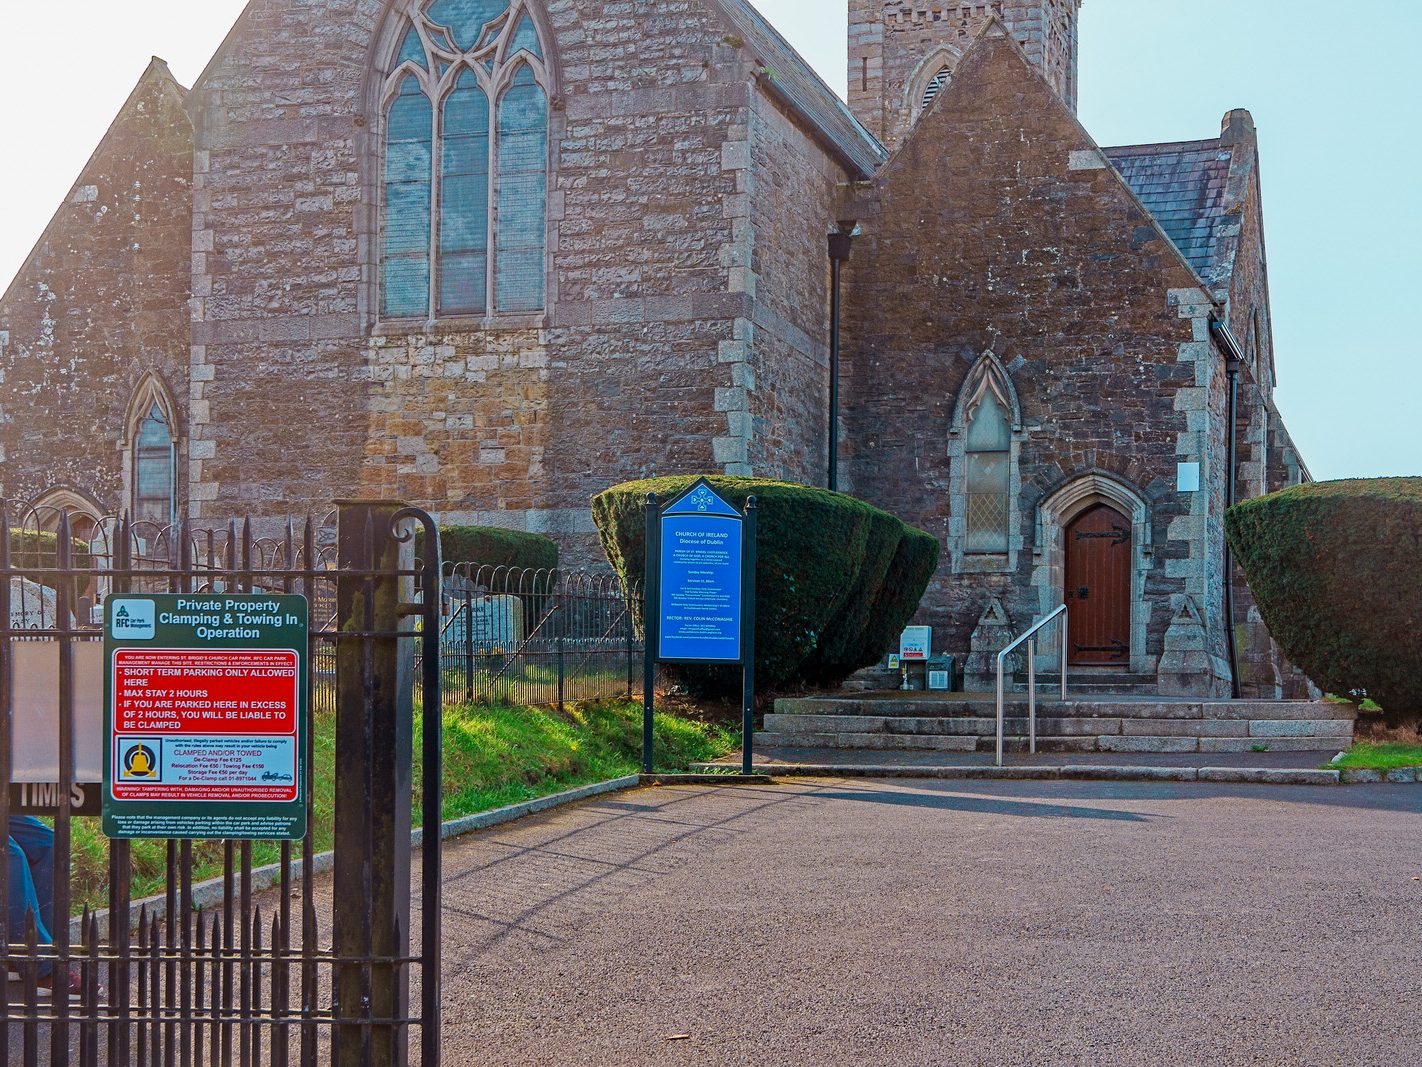 SAINT BRIGID'S CHURCH OF IRELAND CHURCH [CASTLEKNOCK VILLAGE] 004